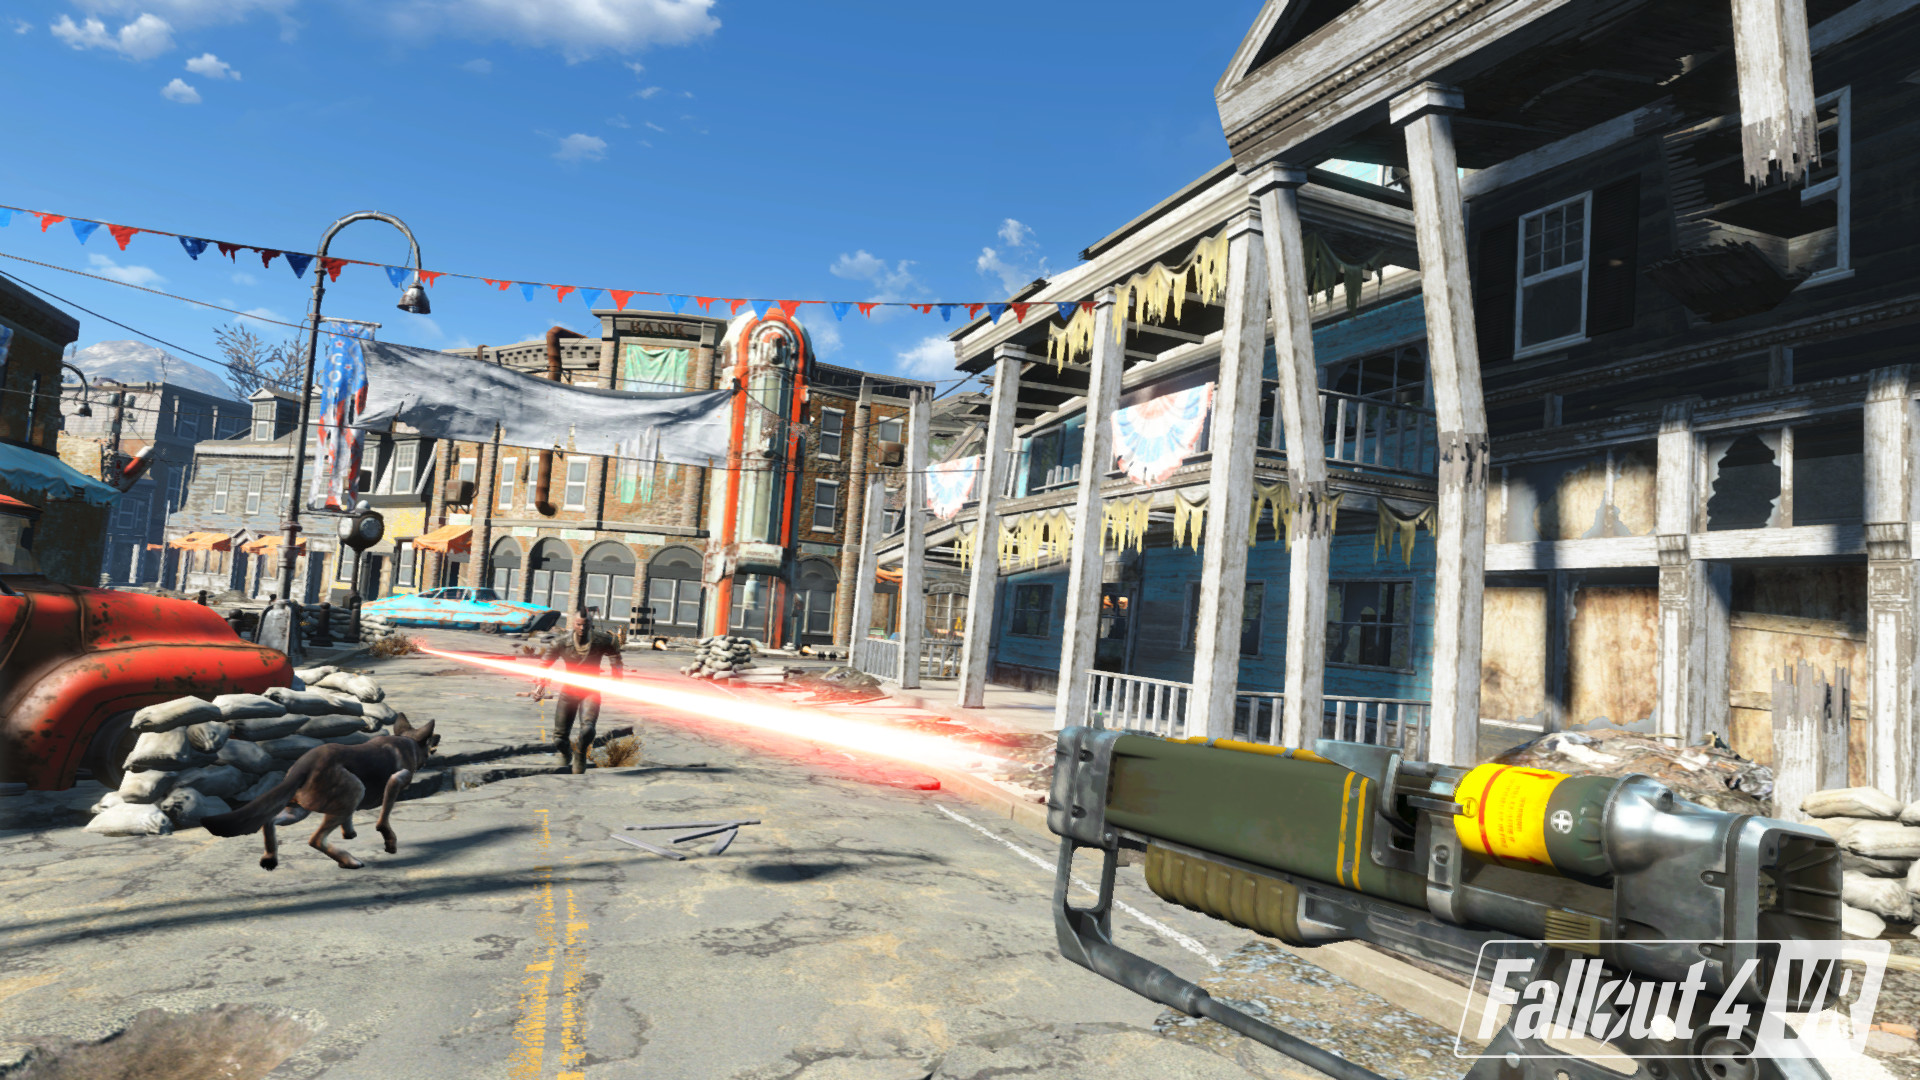 2333VR | 辐射4VR（Fallout 4 VR）HTC VIVE